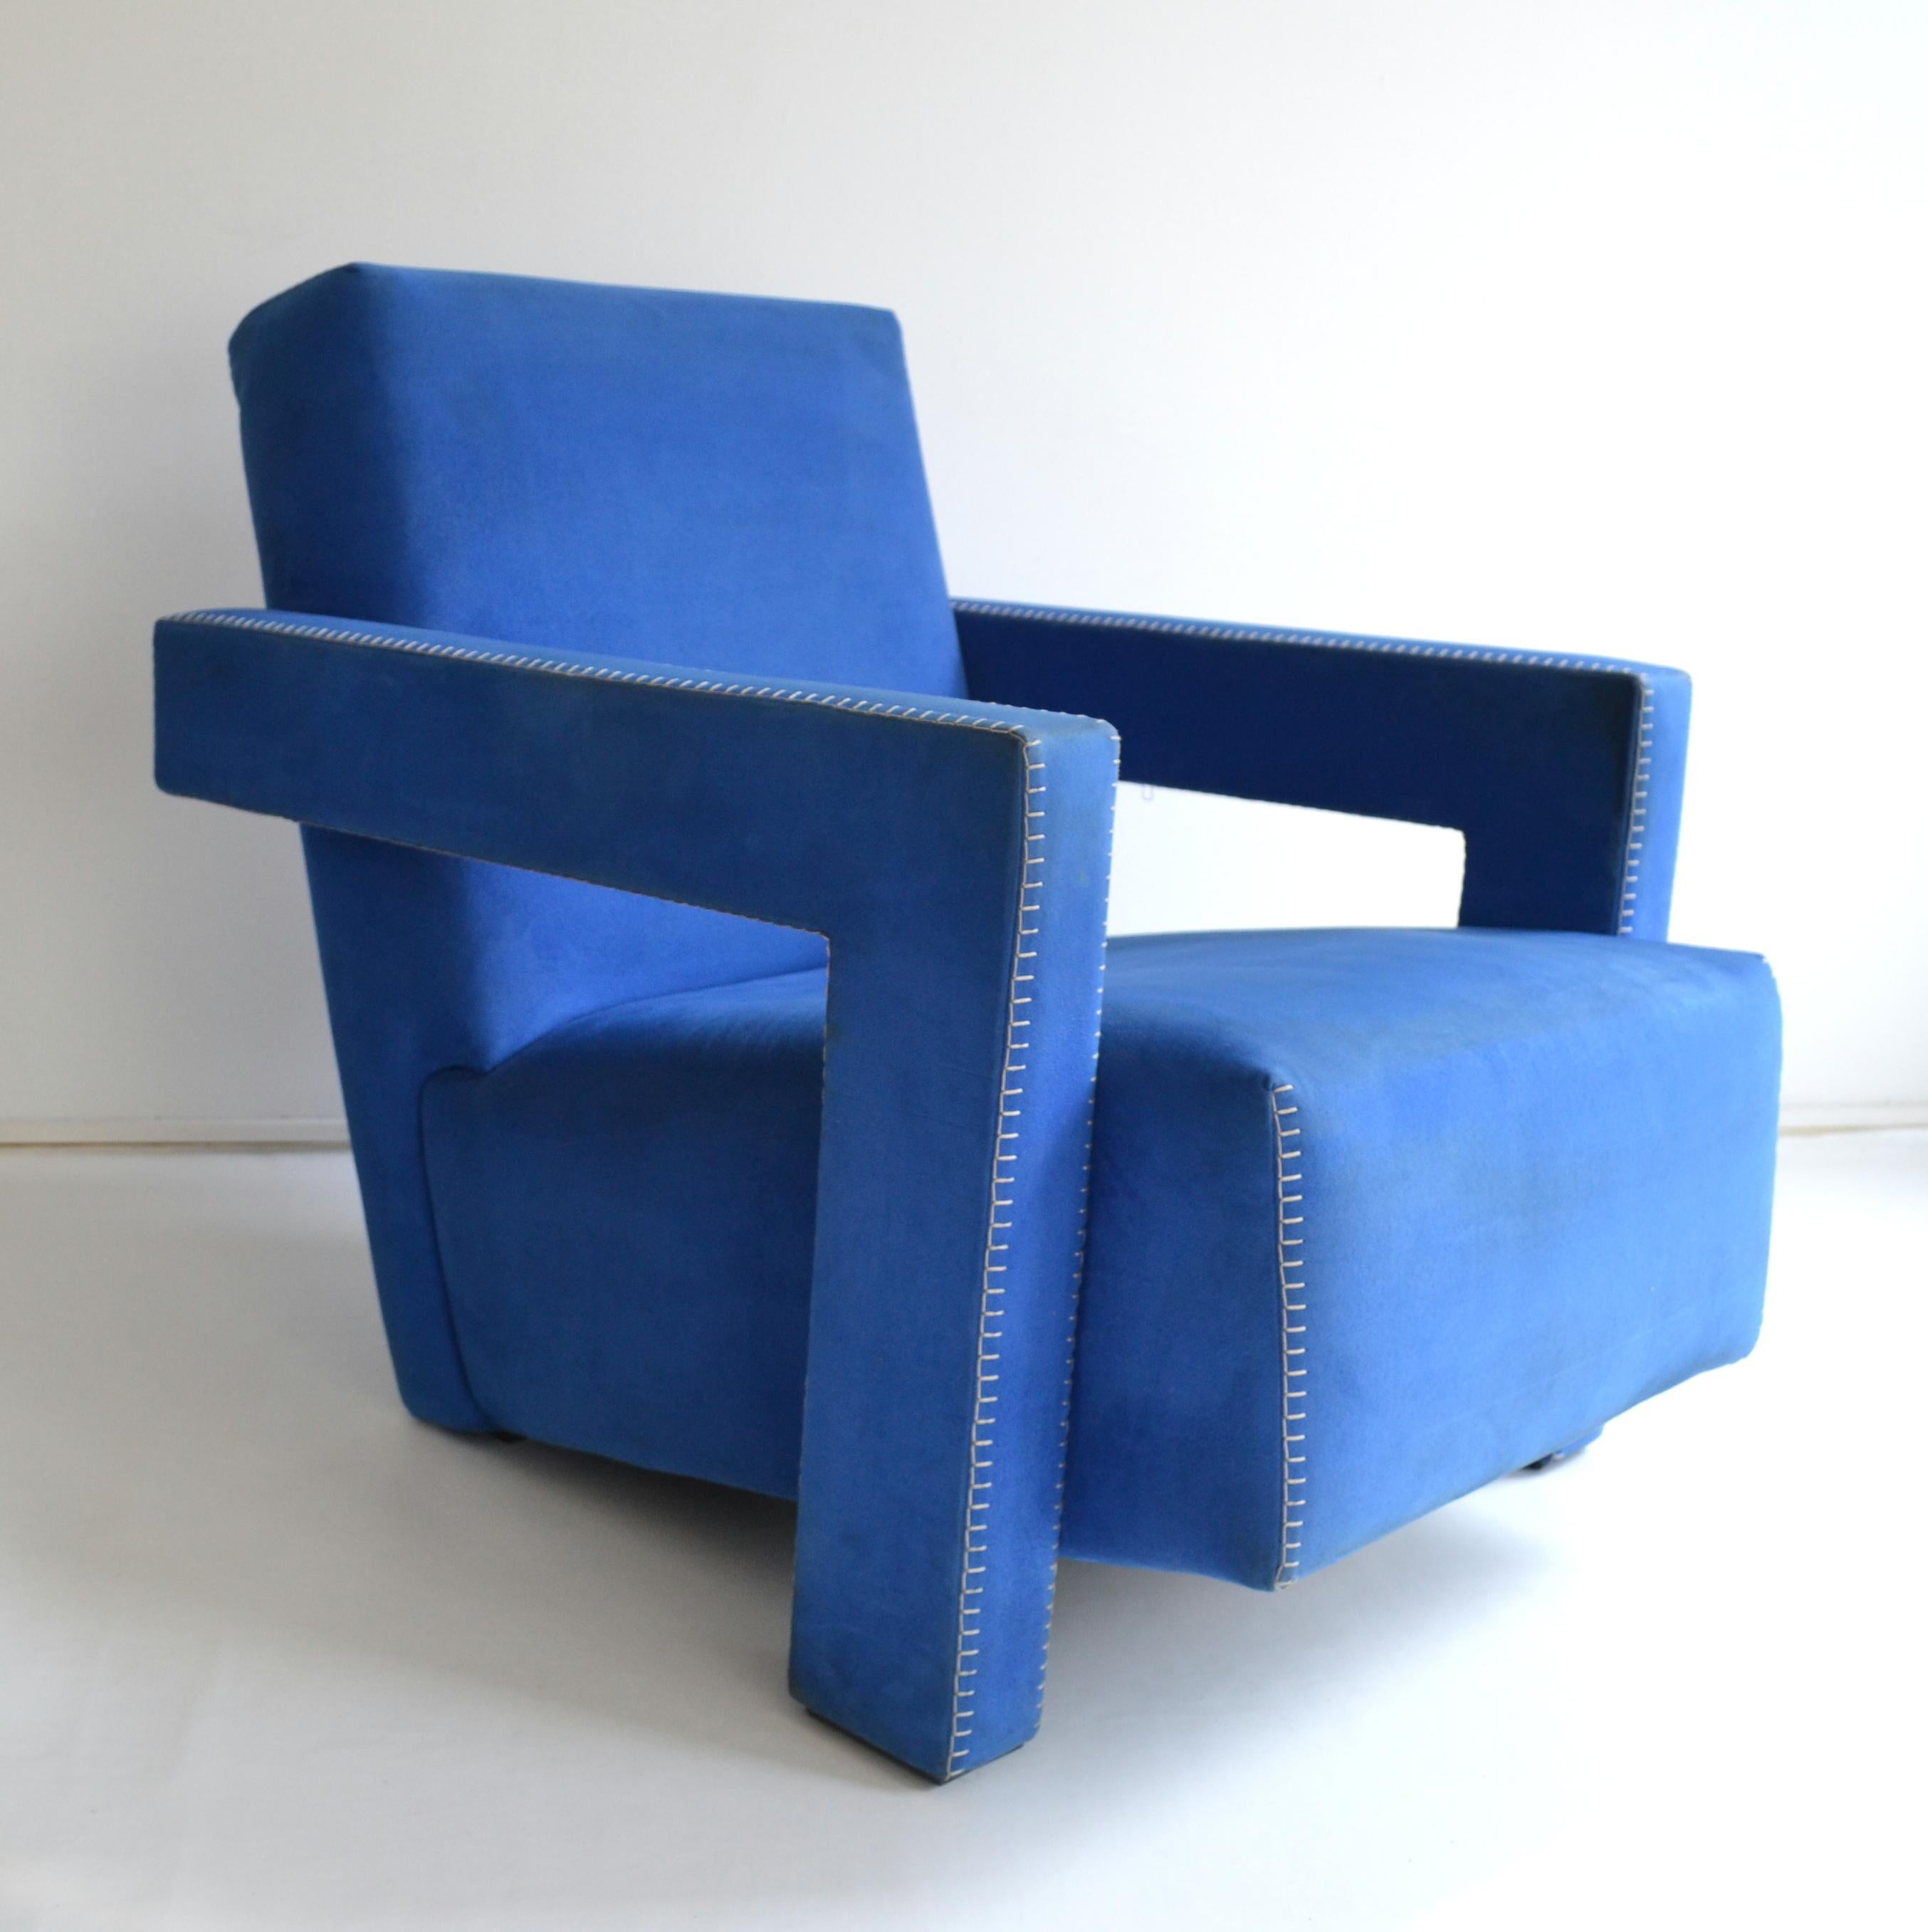 De Stijl Blue 'Utrecht' Chair by Dutch Gerrit Rietveld for Cassina 1980s Italy